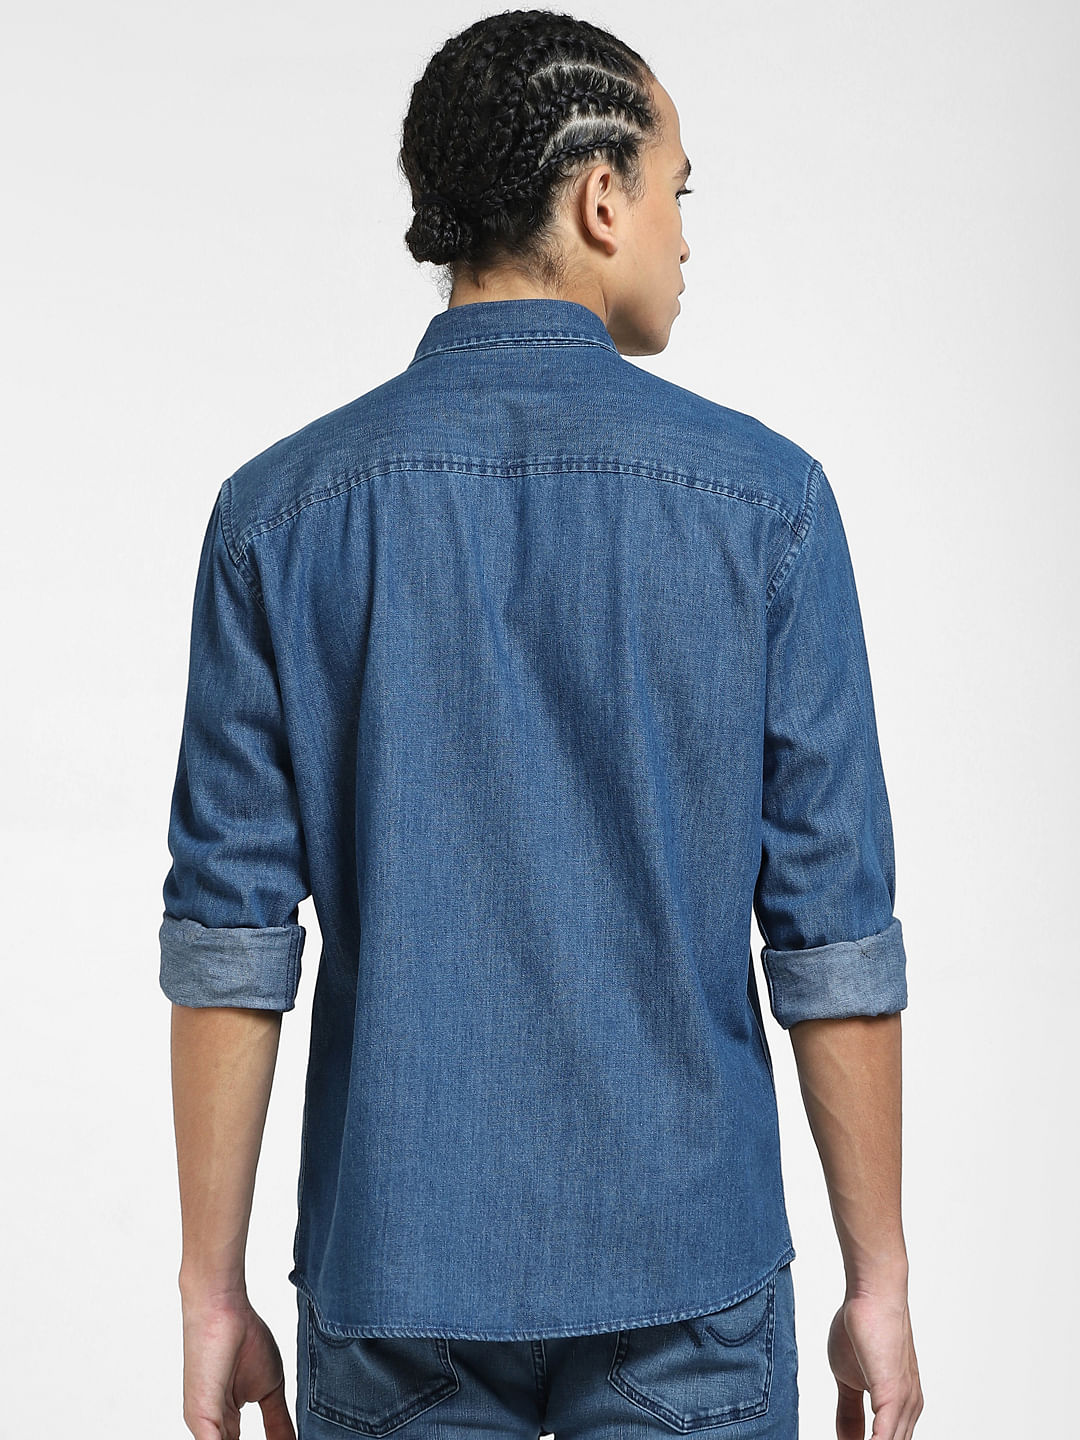 Buy Wholesale Lukkari Men Blue & Navy Blue Faded Casual Denim Shirt